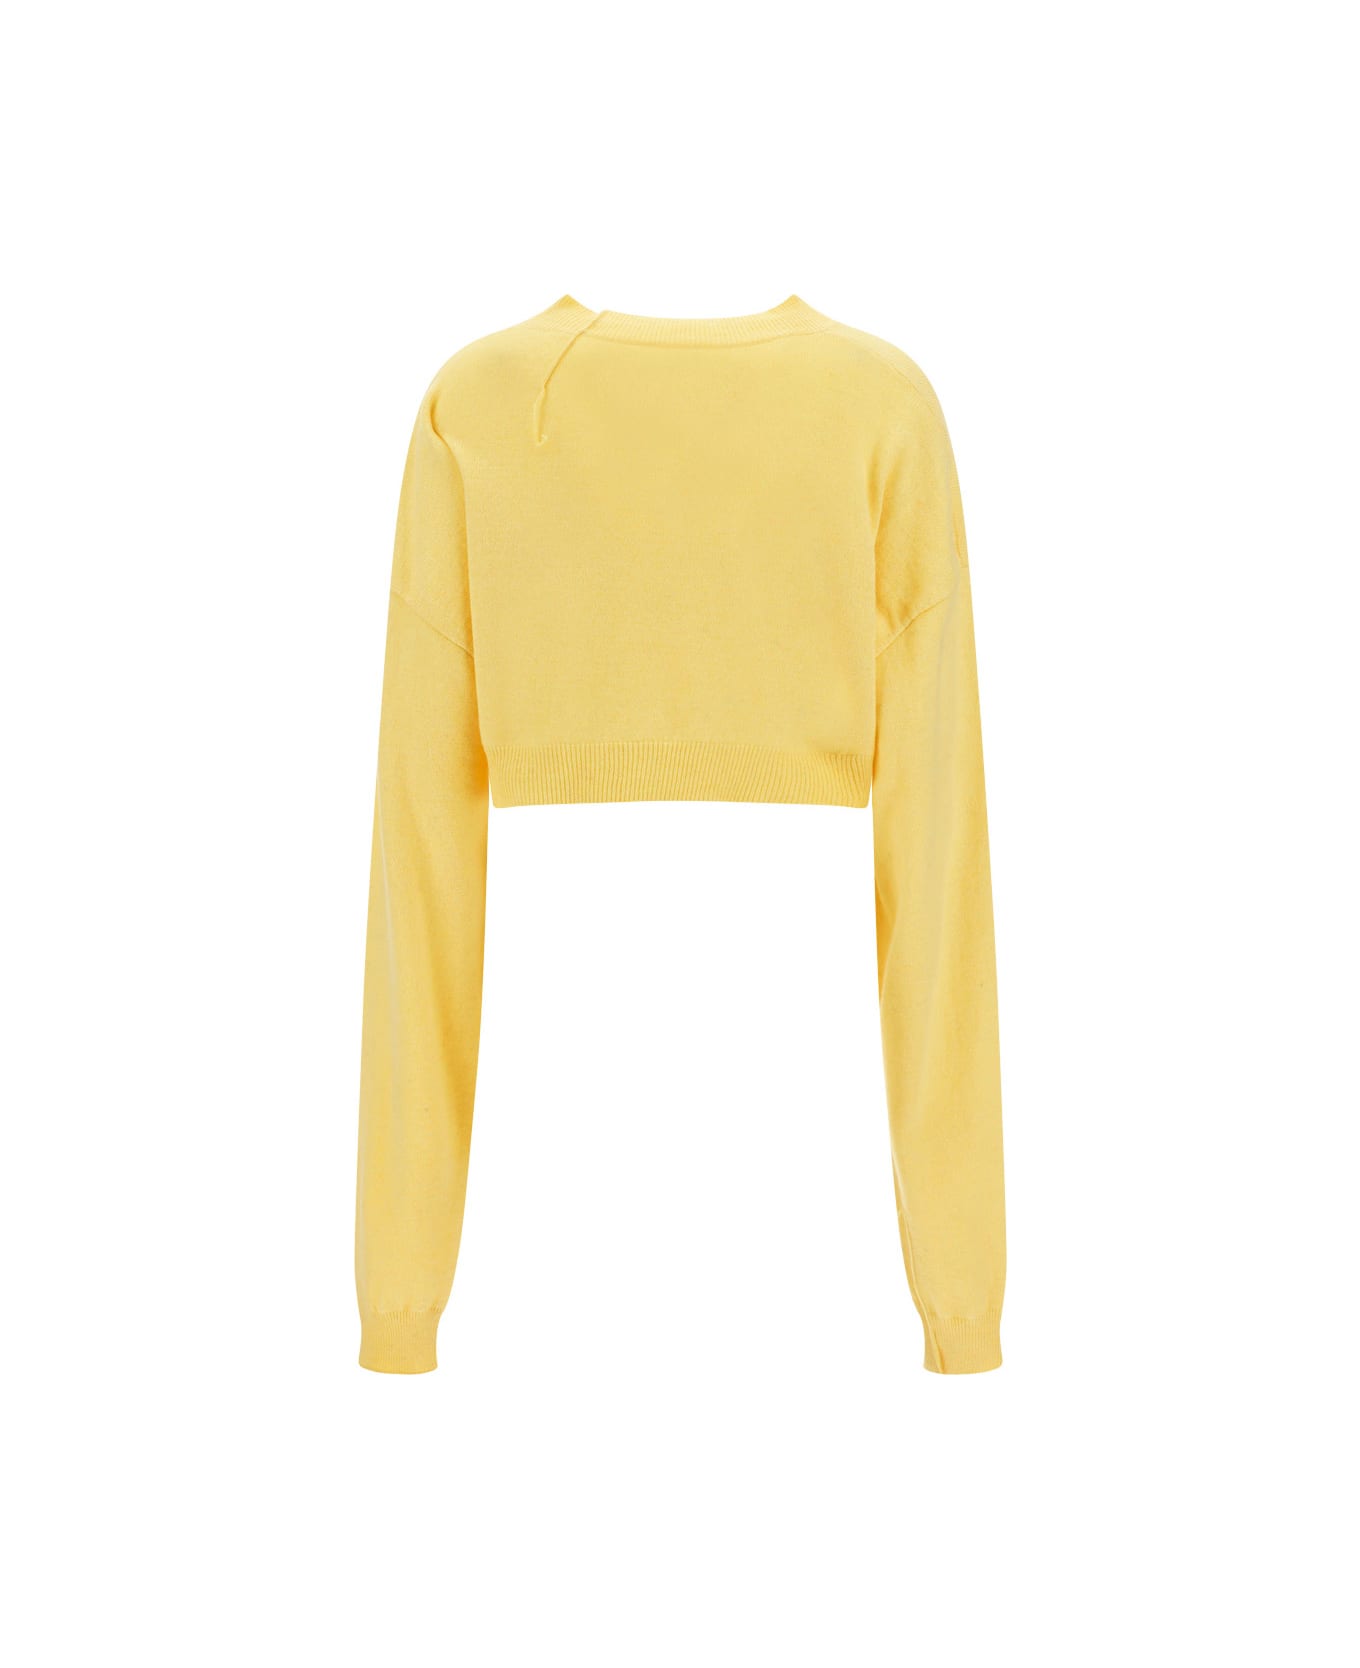 Ramael Infinity Sweater - Yellow